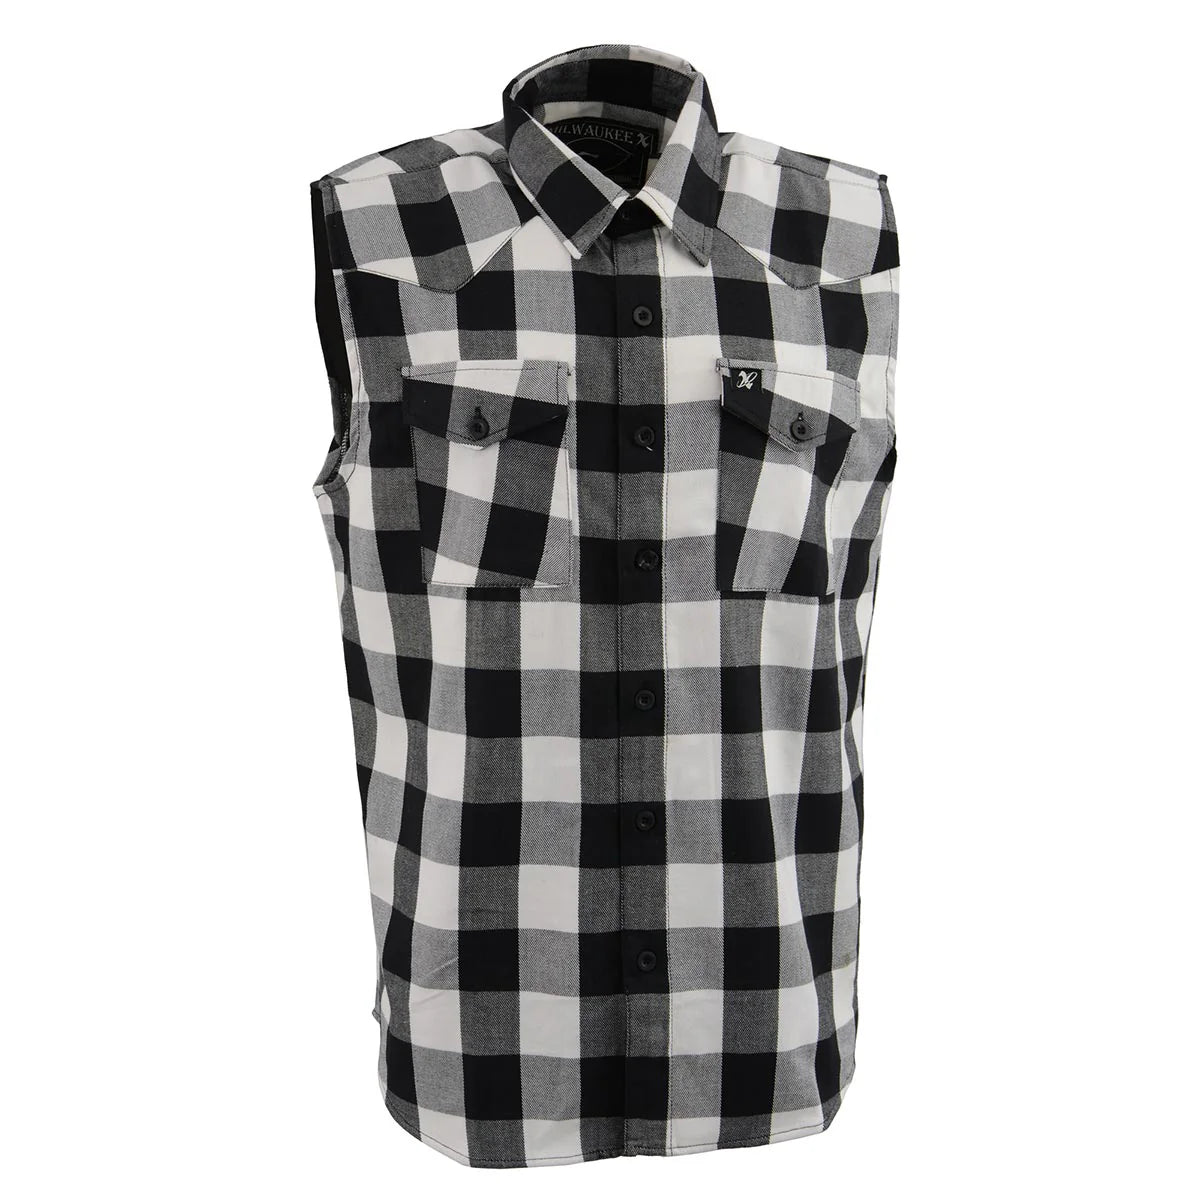 Men's Button-Down Flannel Cut Off Sleeveless Casual Shirt